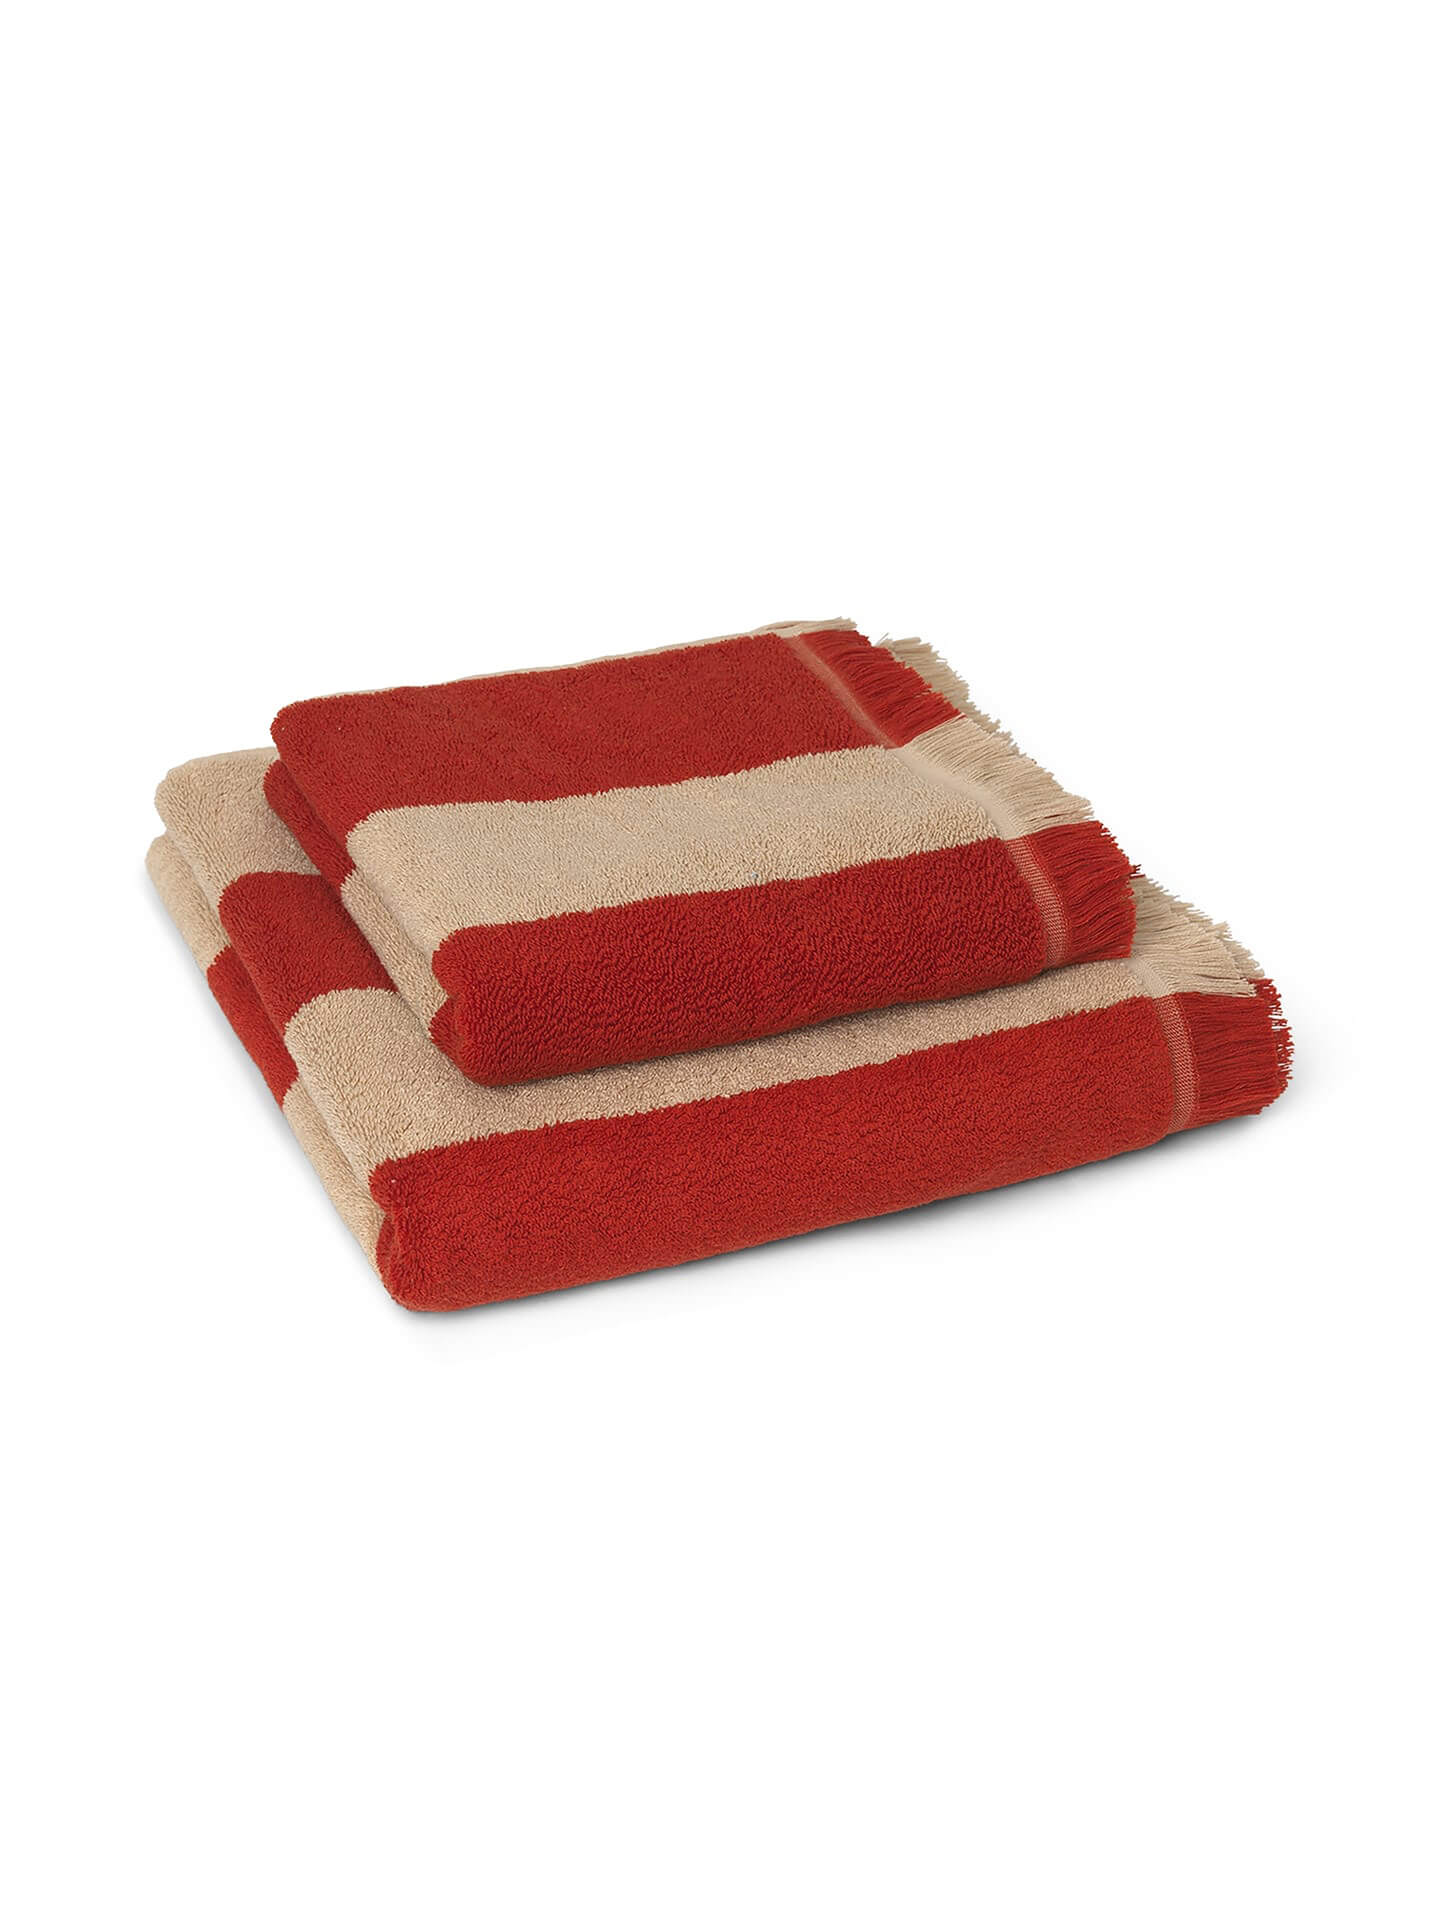 Alee Bath Towel | Camel & Red | Cotton | by ferm Living - Lifestory - ferm LIVING